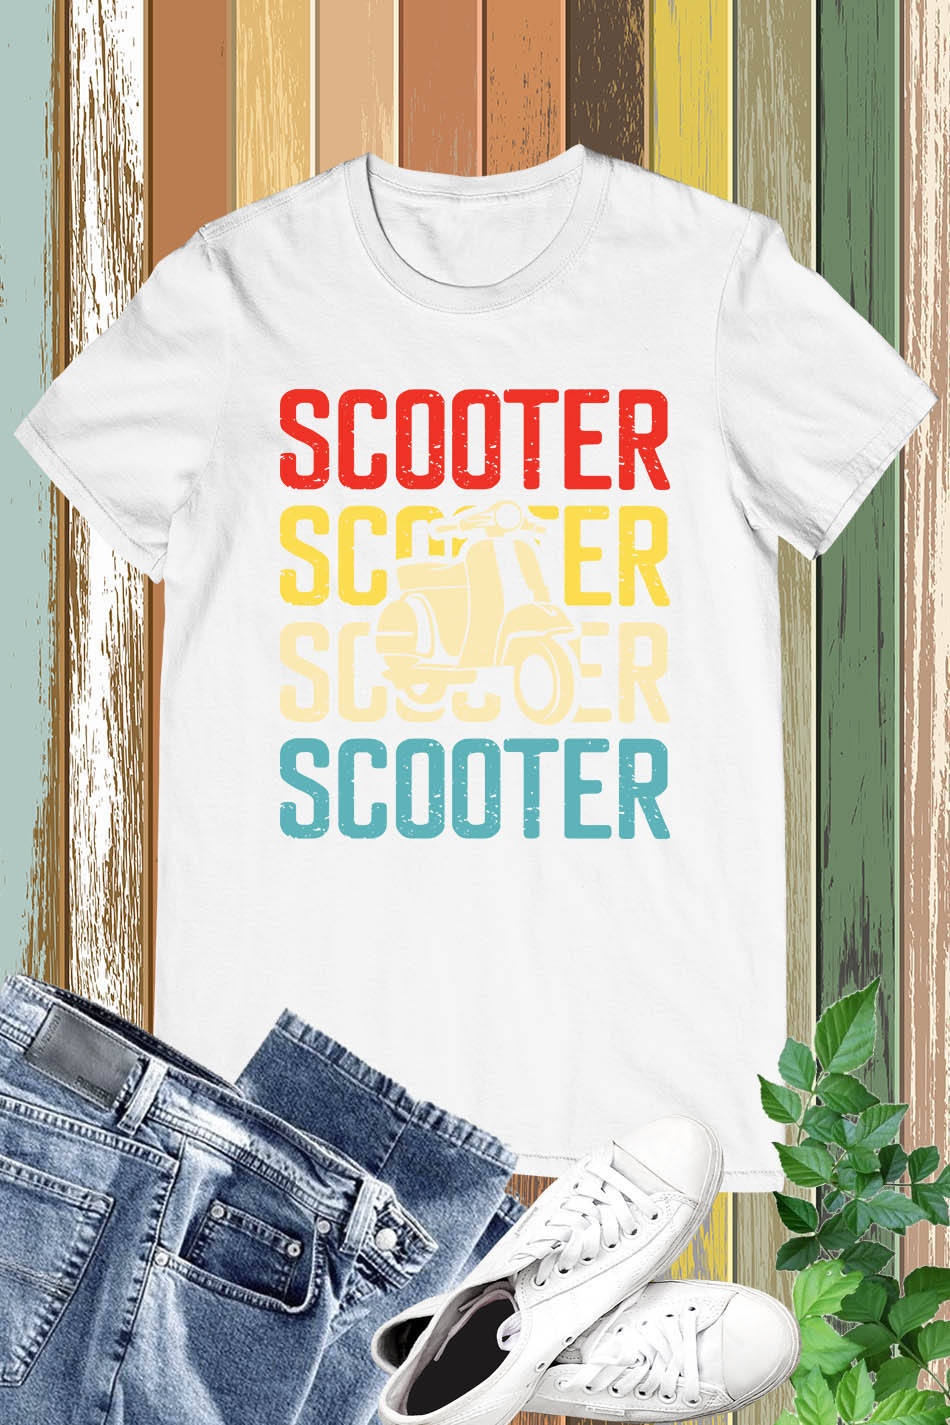 Vintage Scooter T-shirt